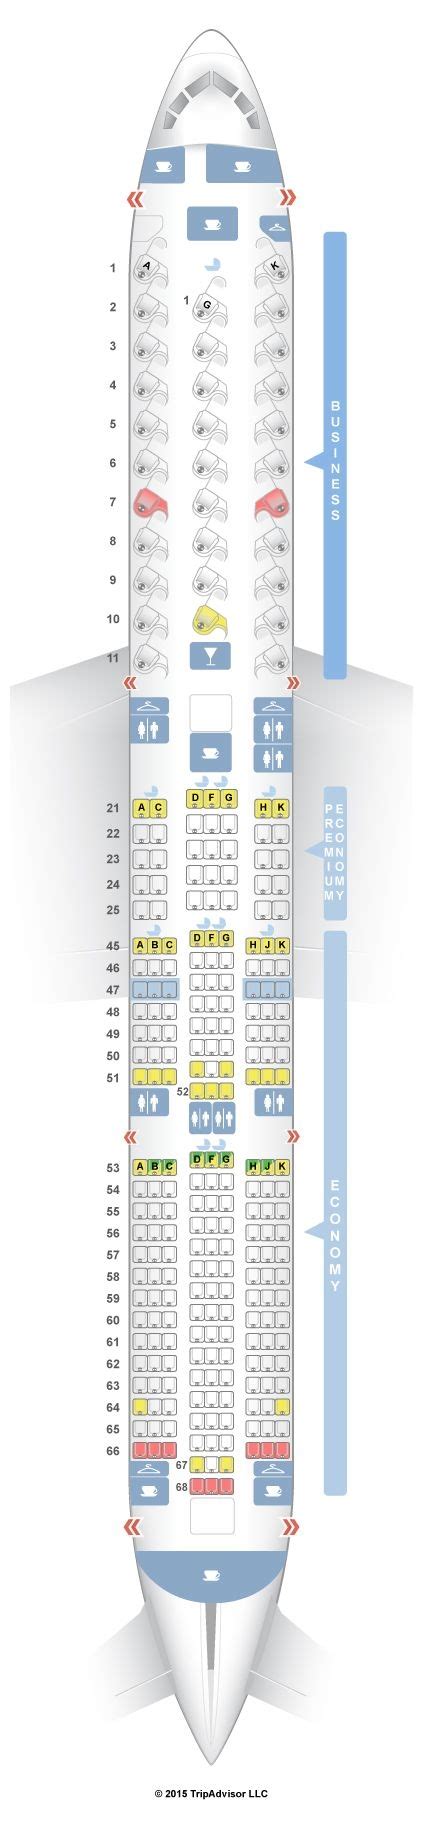 7 Photos Boeing 787 9 Seat Map Virgin Atlantic And Description Alqu Blog